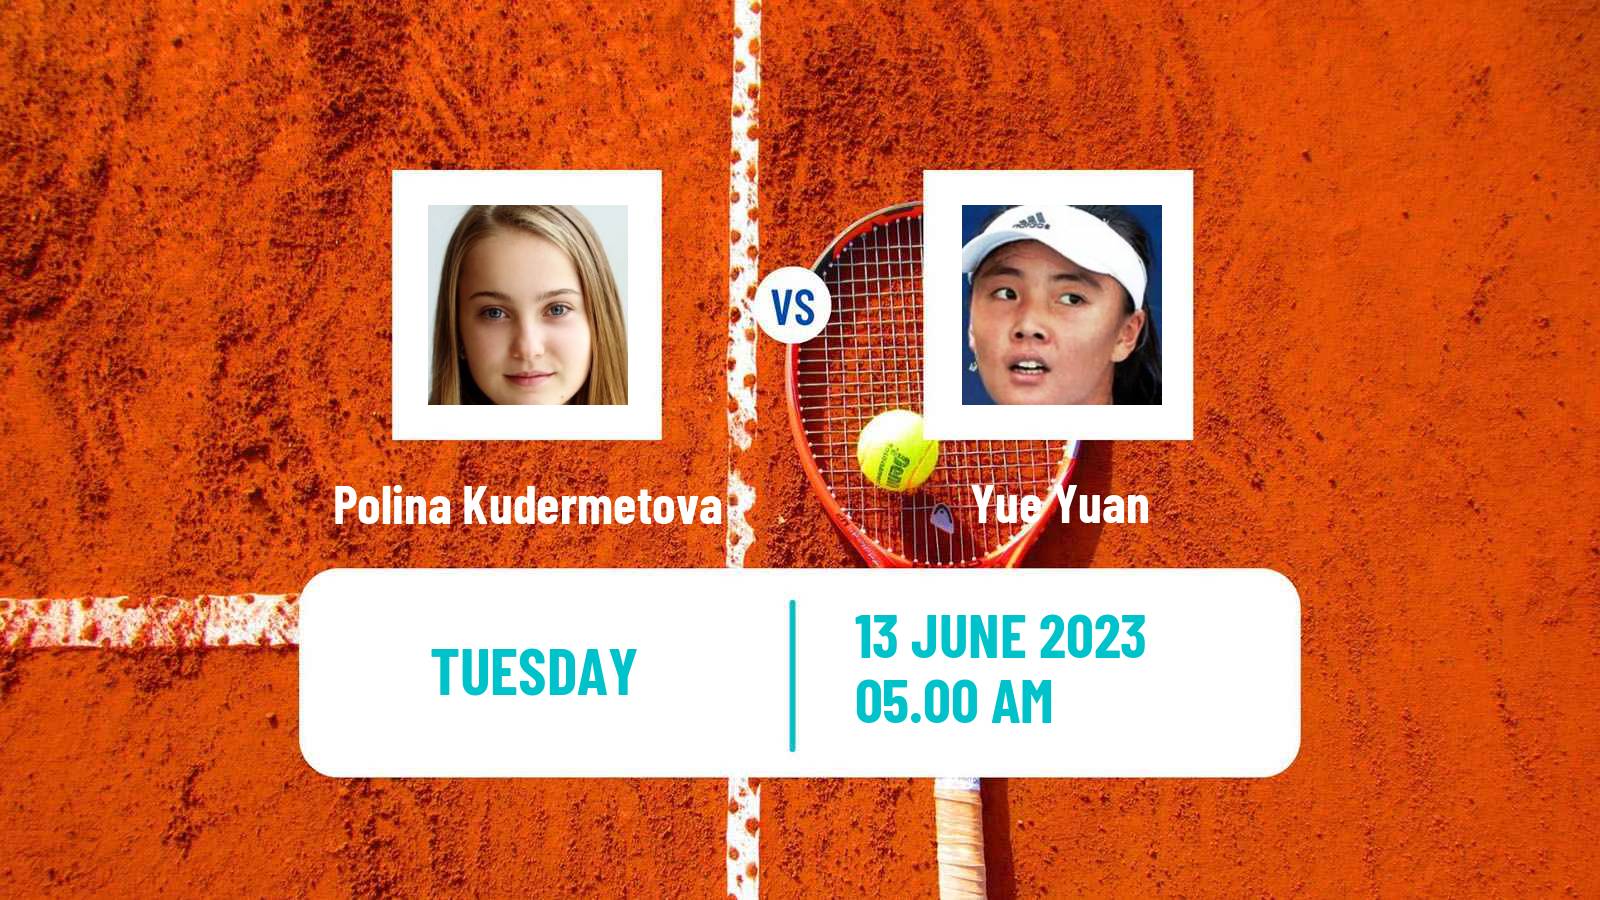 Tennis WTA Hertogenbosch Polina Kudermetova - Yue Yuan